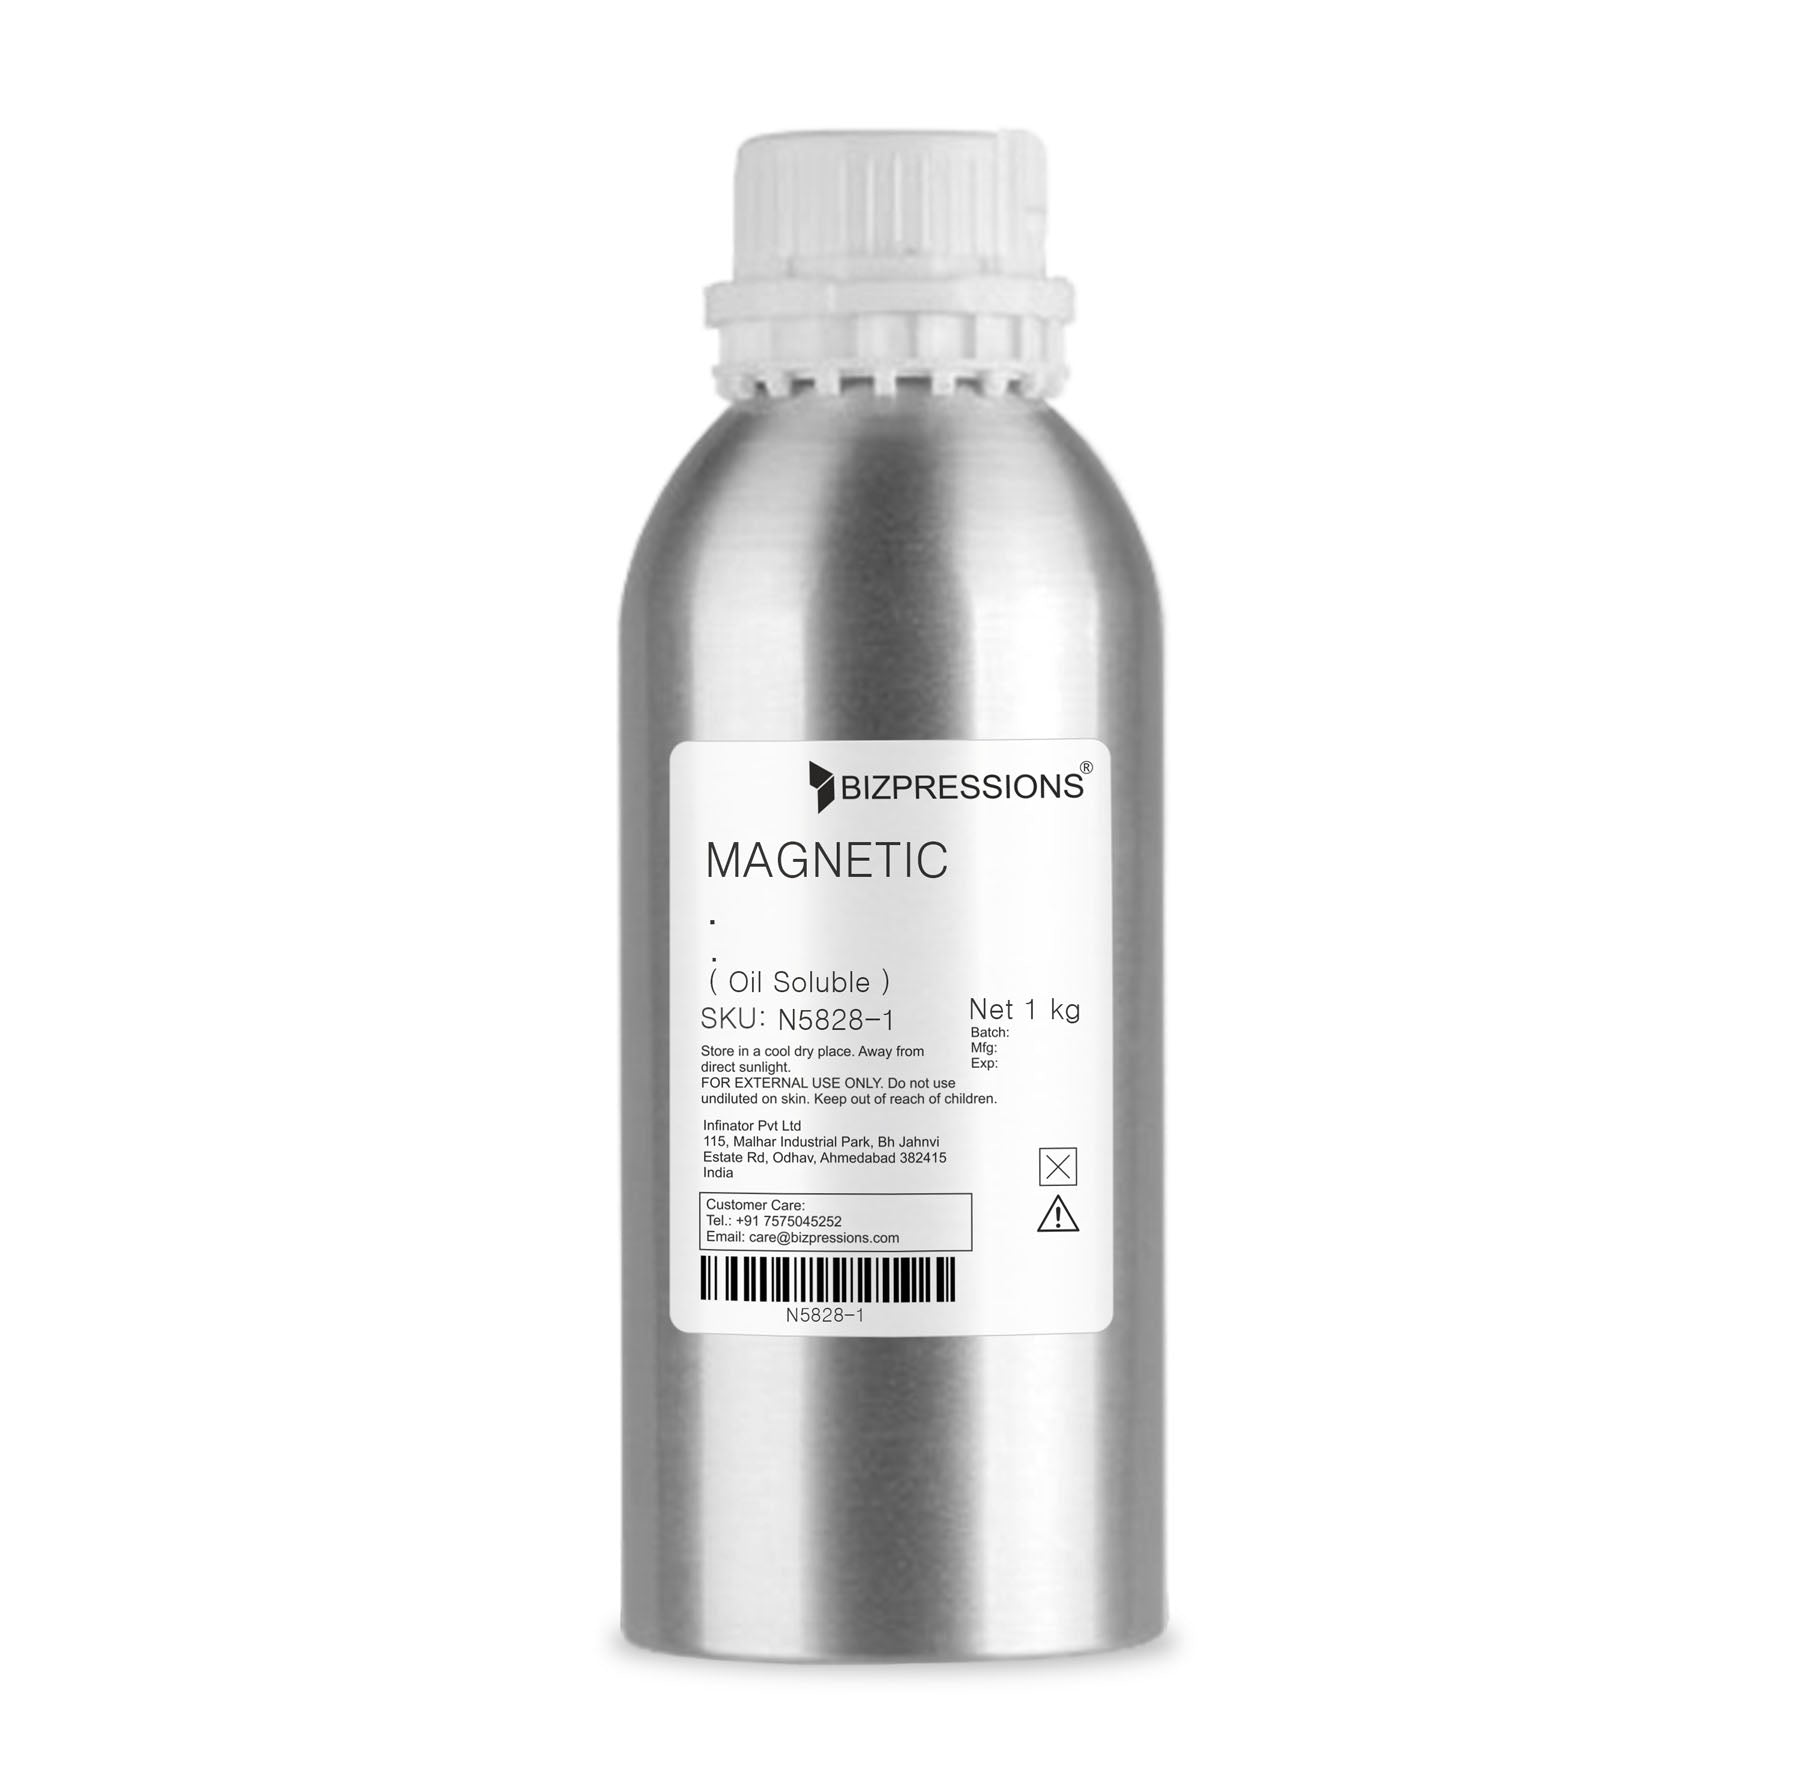 MAGNETIC - Fragrance ( Oil Soluble ) - 1 kg